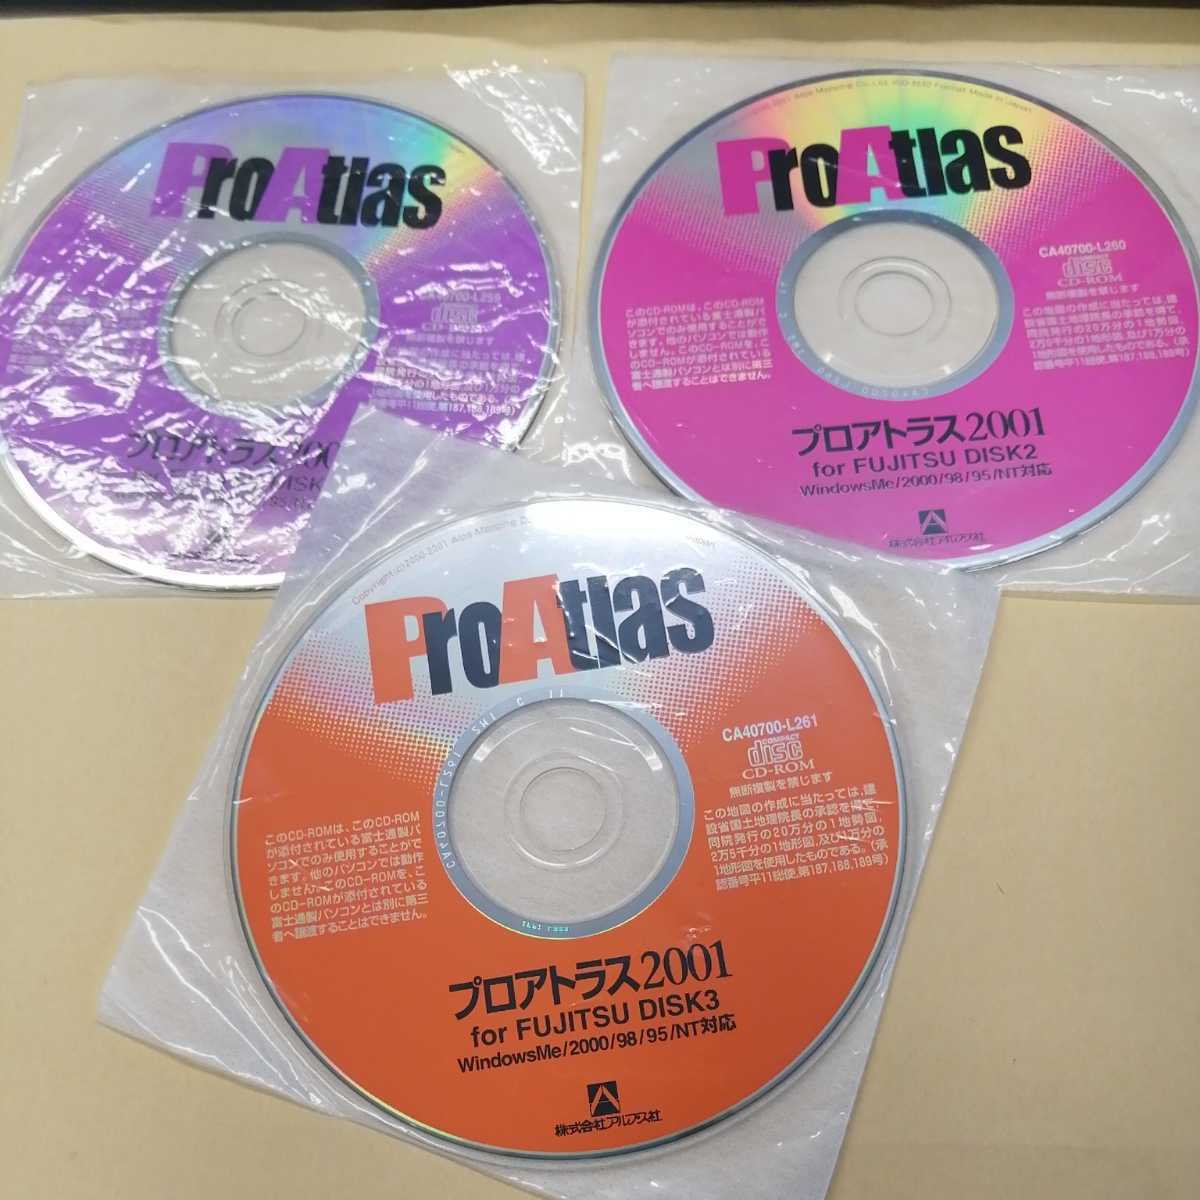  Pro Atlas 2001 for FUJITSU DISK1,2,3 3 шт. комплект 